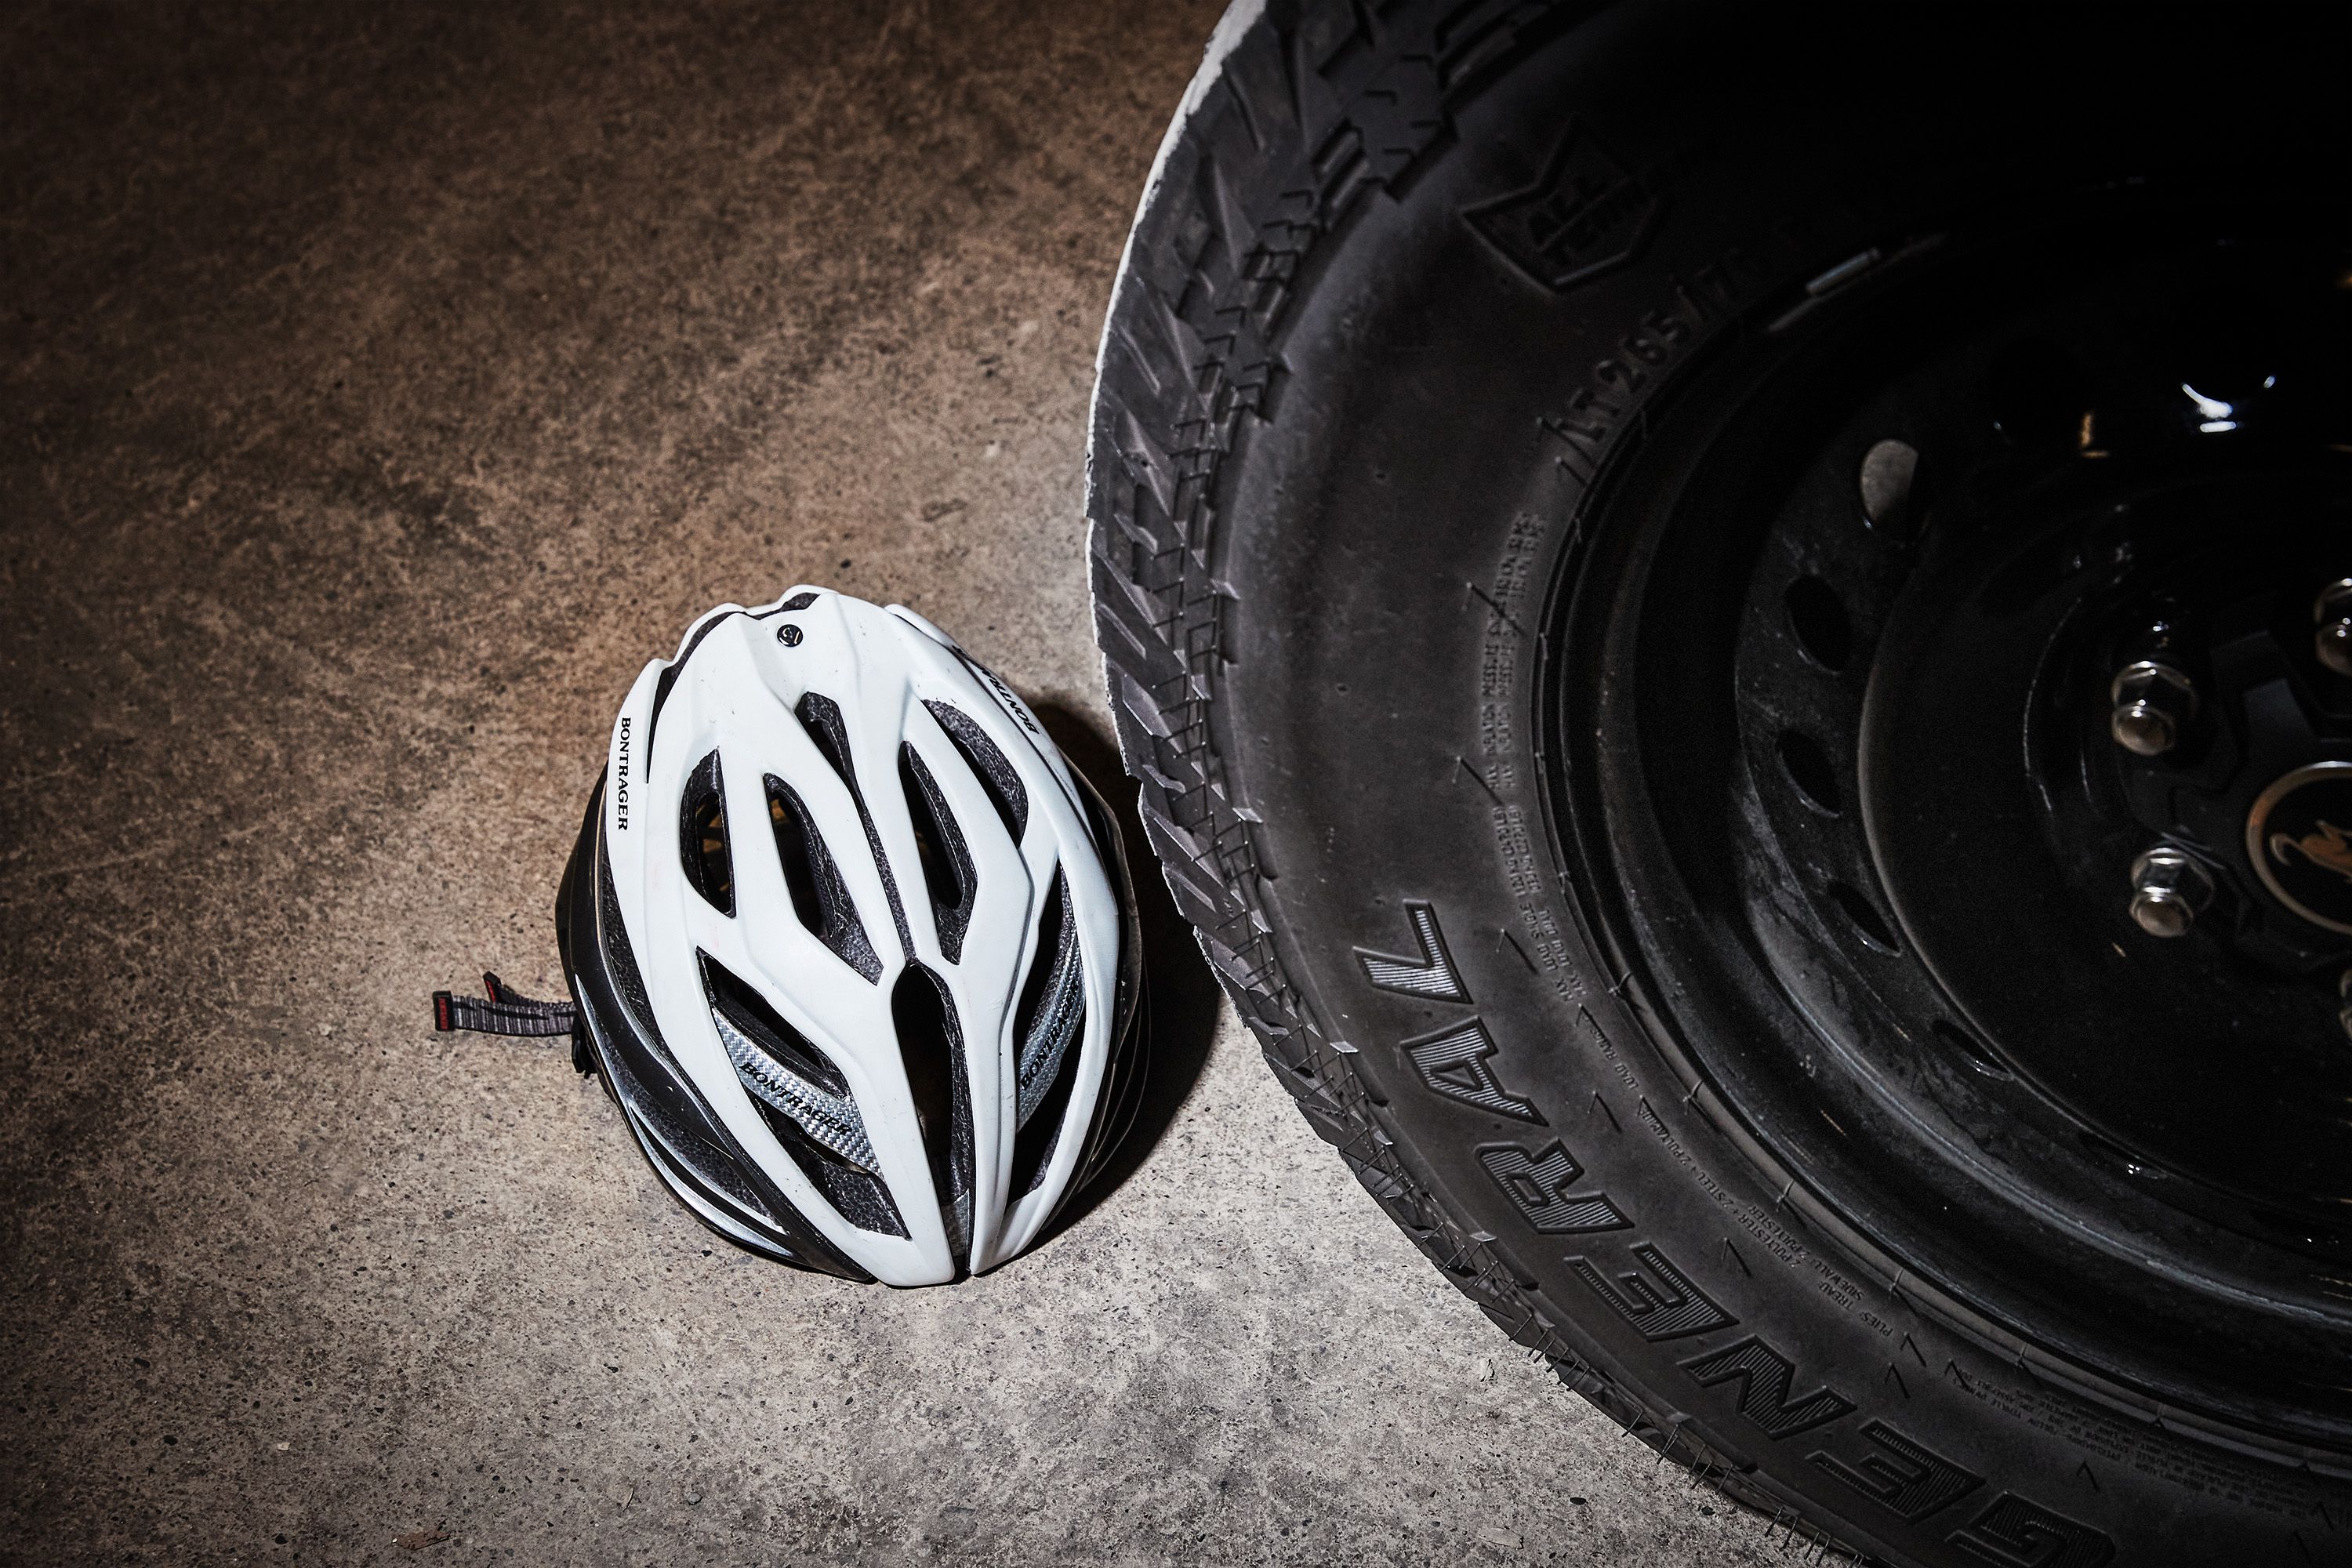 Bike Helmet Safety Cars to Blame in Bike Accidents